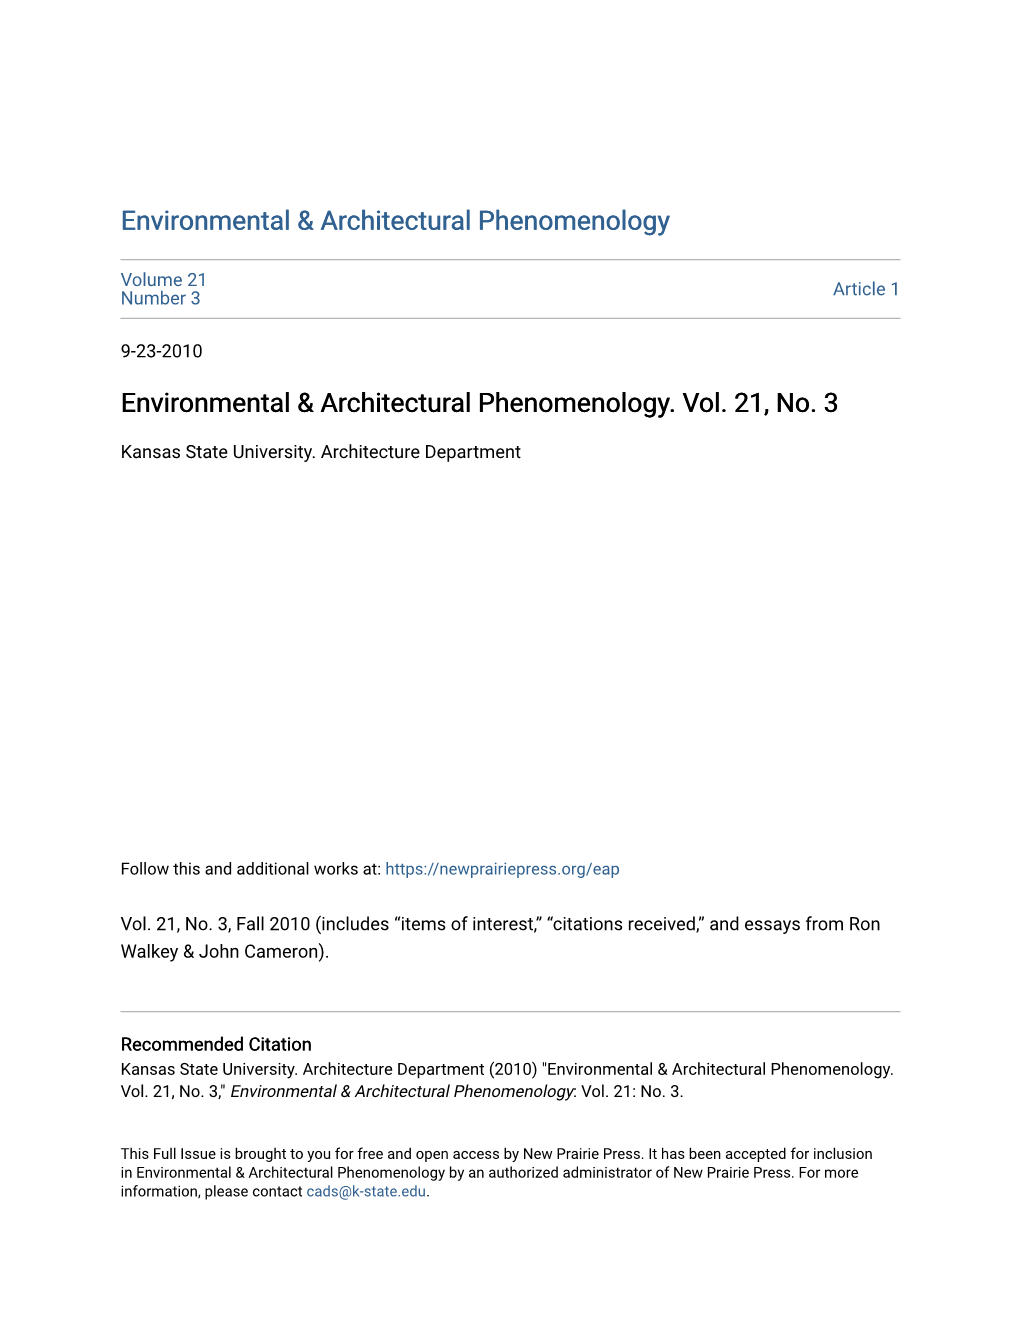 Environmental & Architectural Phenomenology. Vol. 21, No. 3